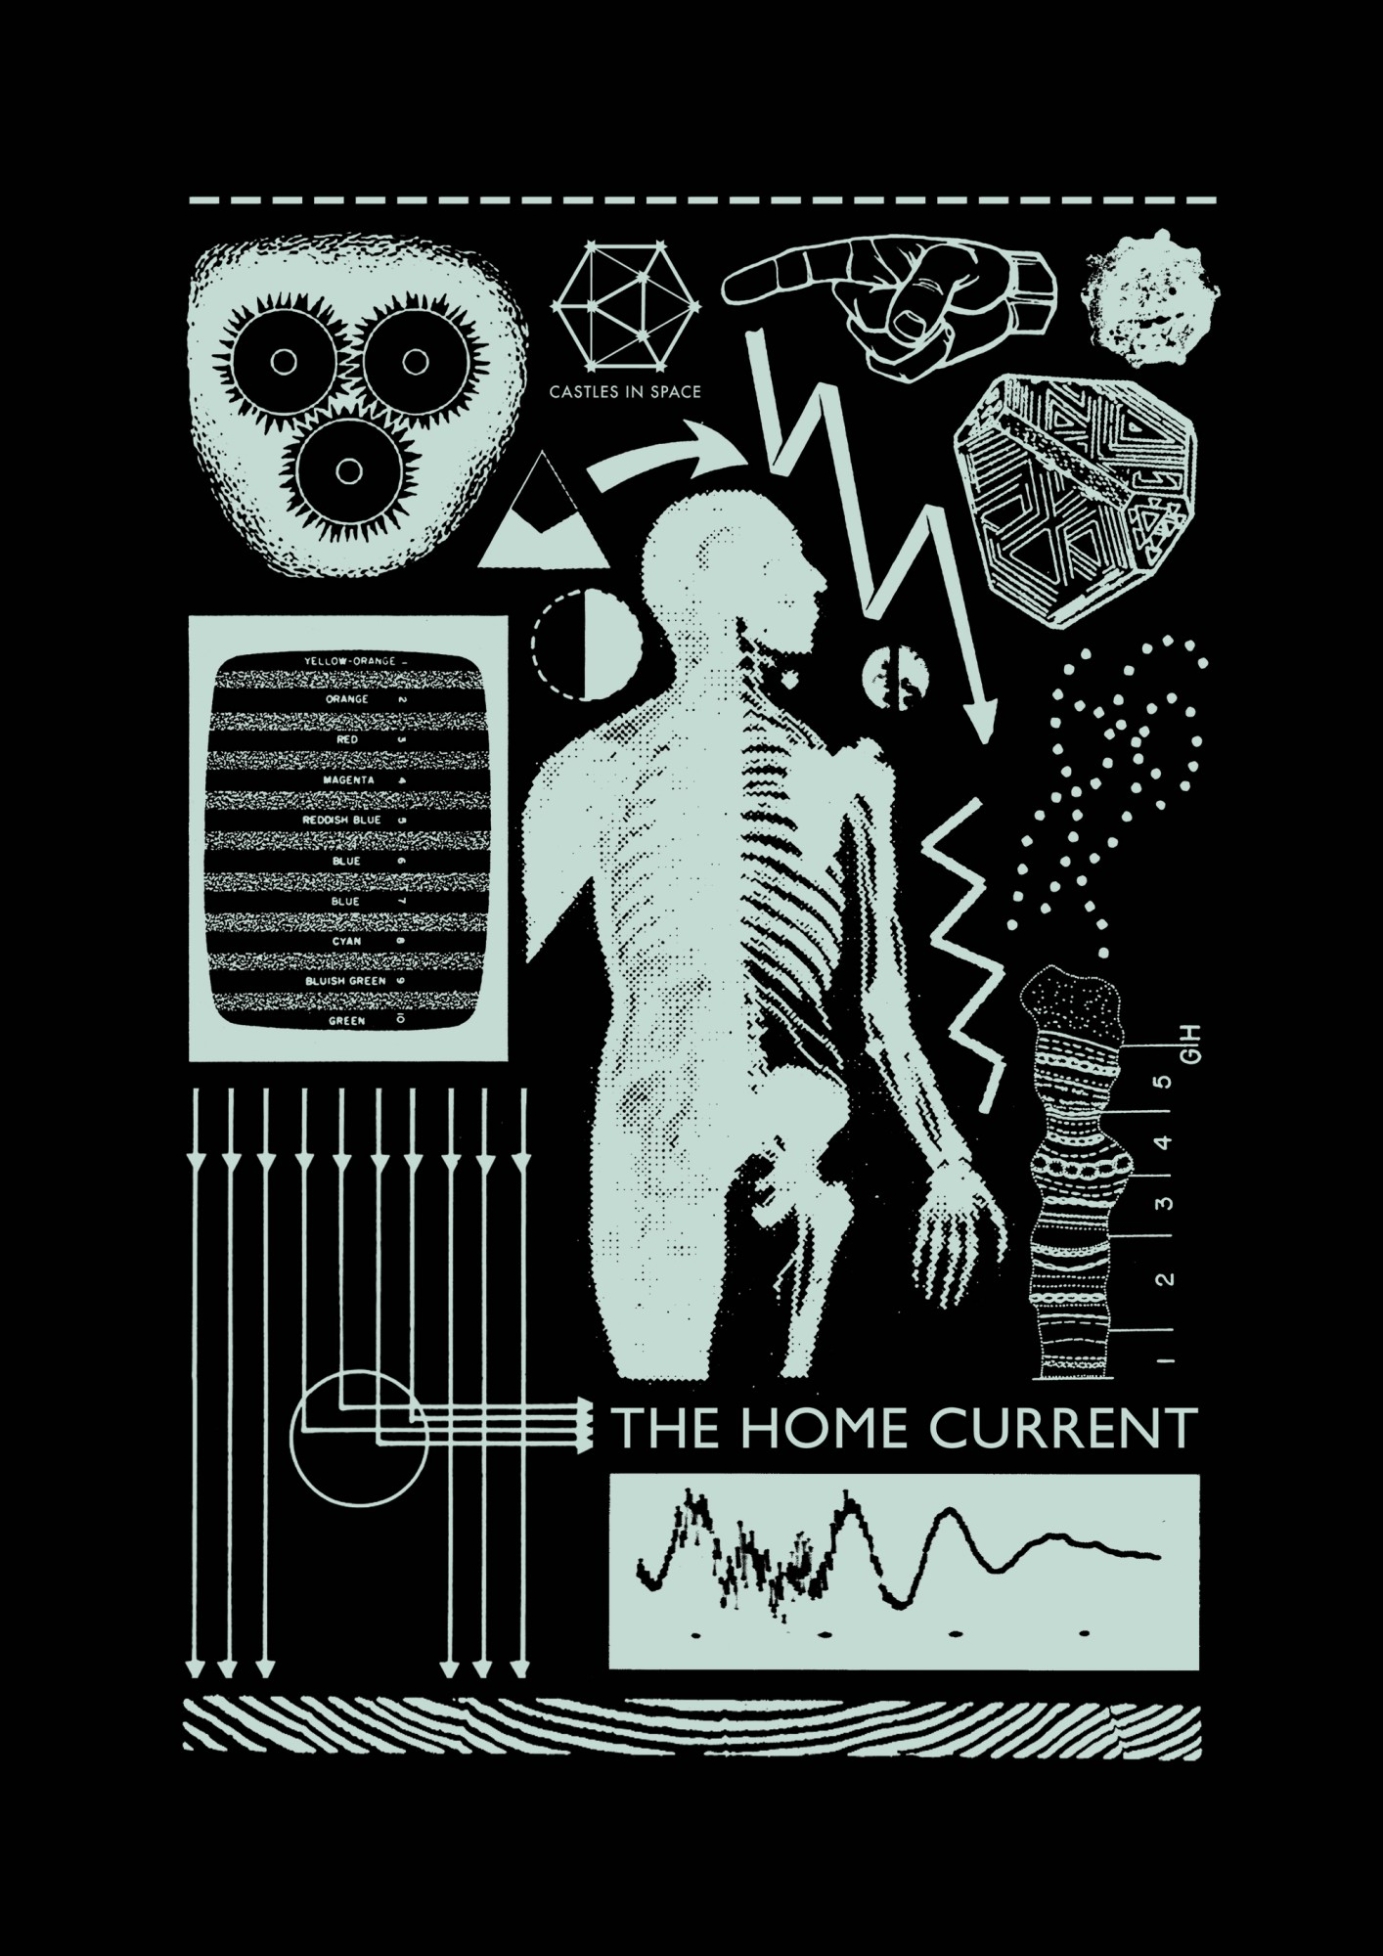 Artwork for The Home Current by NickTaylorIllustration